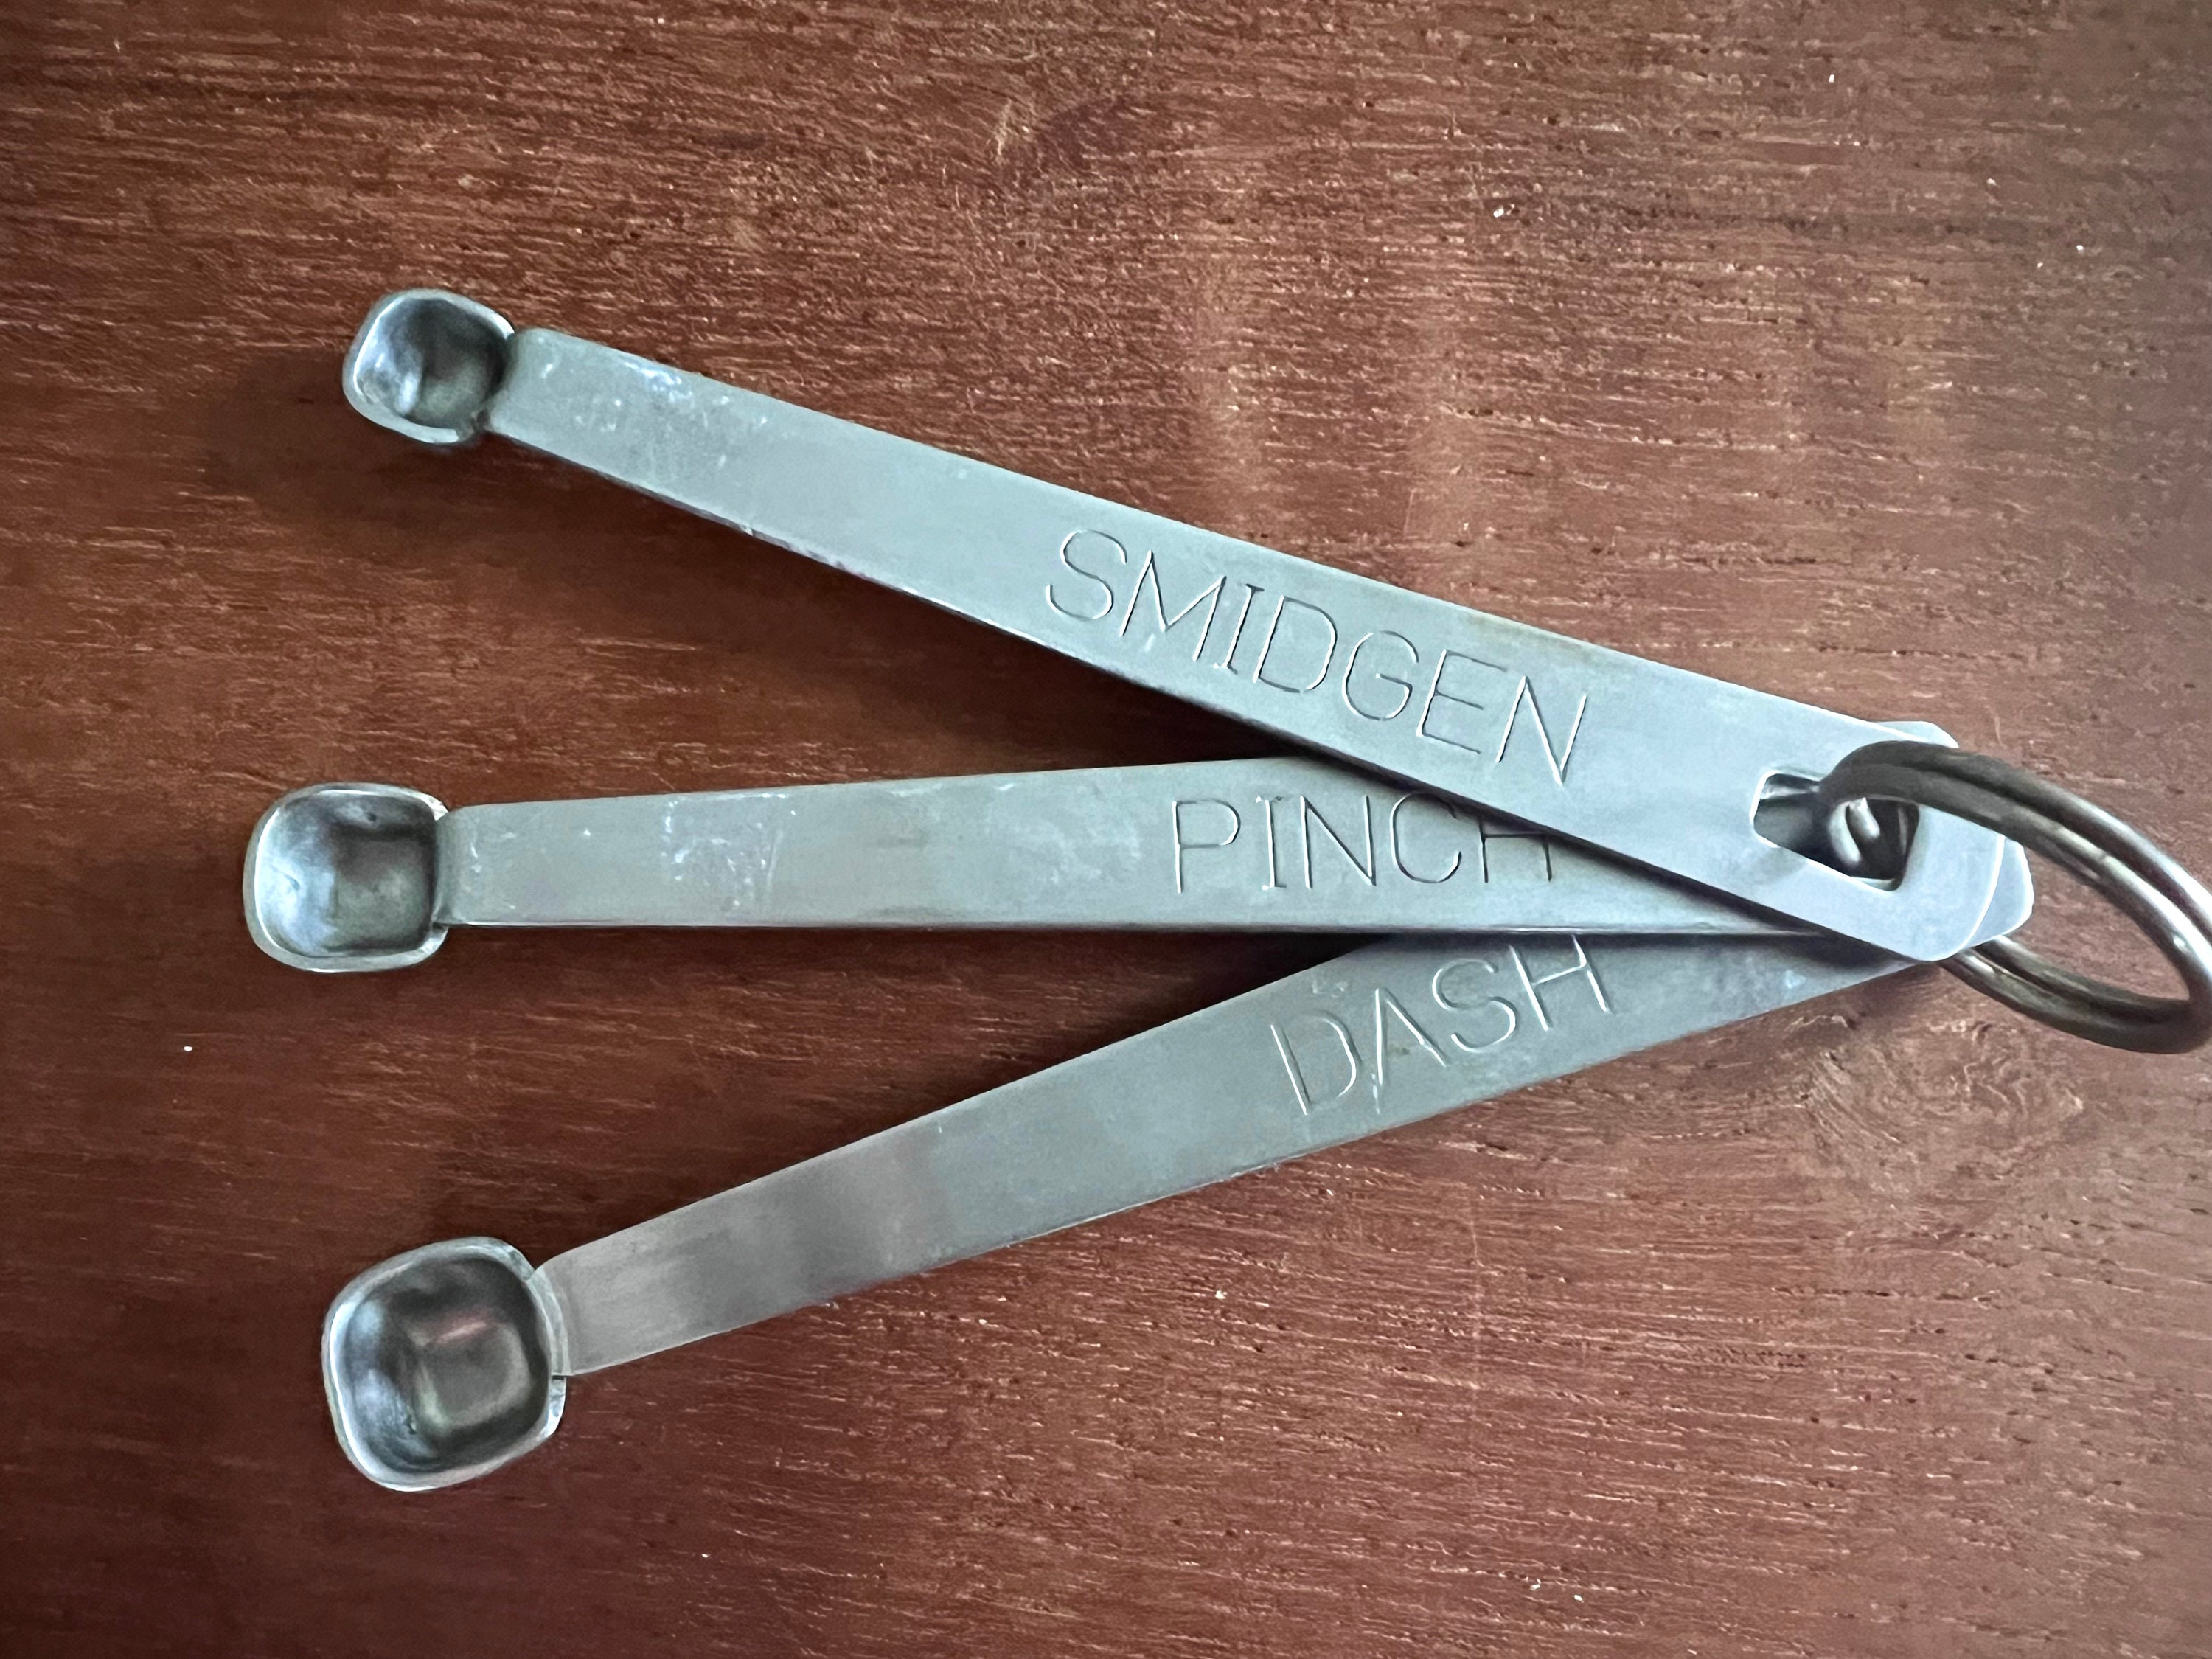 5PCS Mini Stainless Steel Measuring Spoon Set Tad Dash Pinch Smidgen Drop